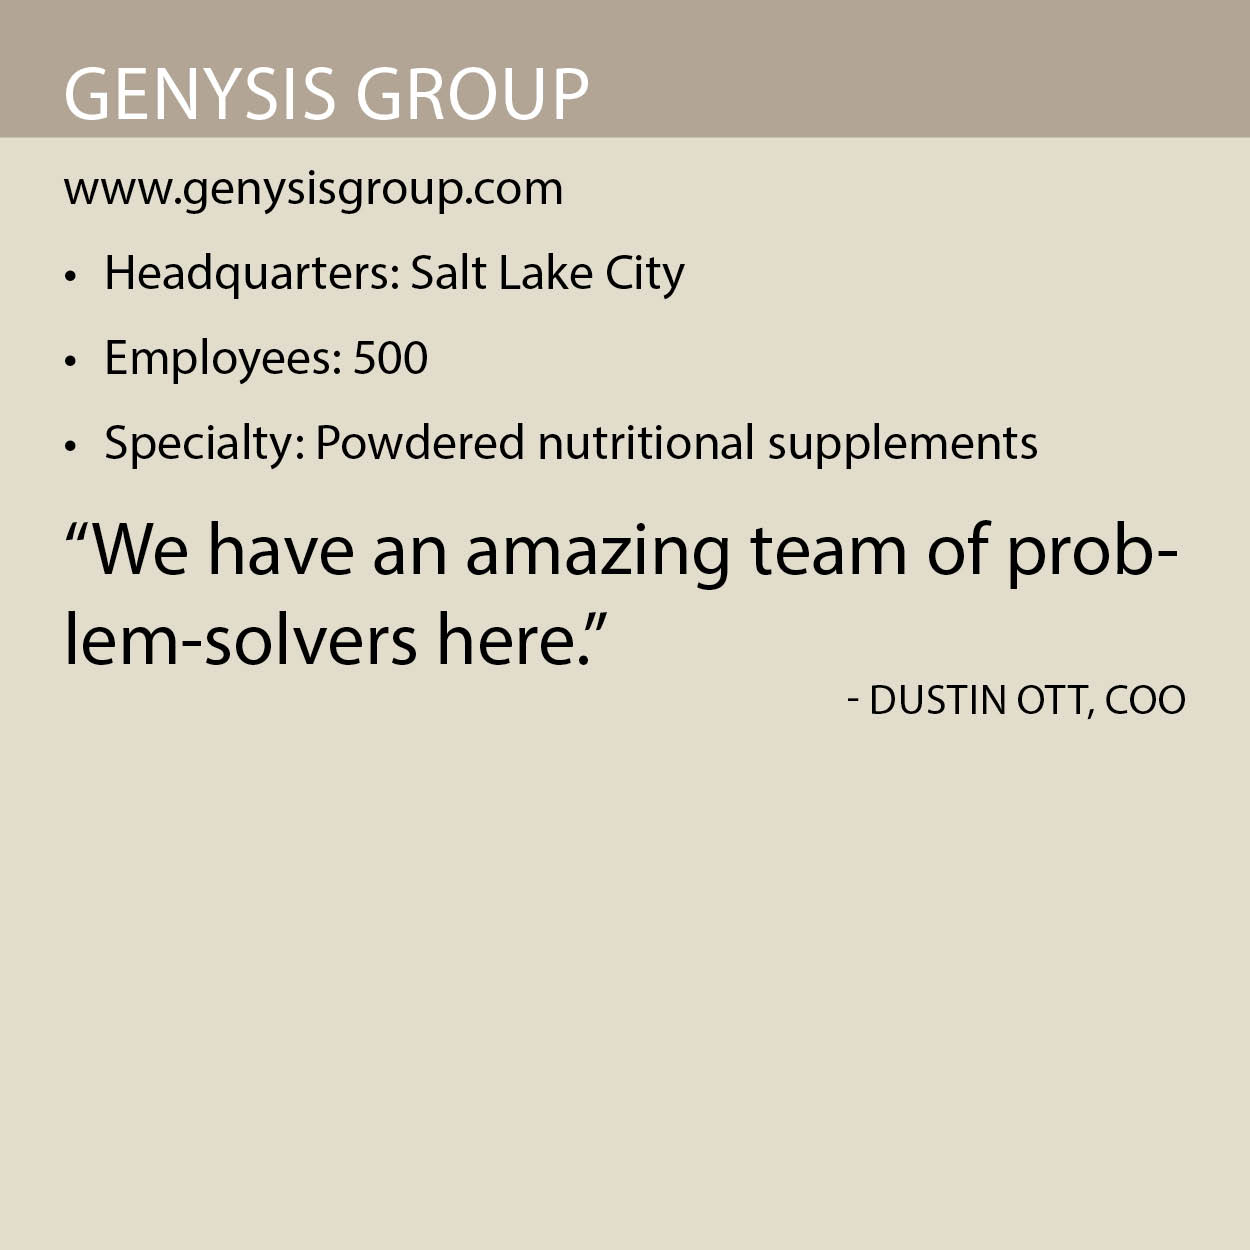 Genysis Group fact box